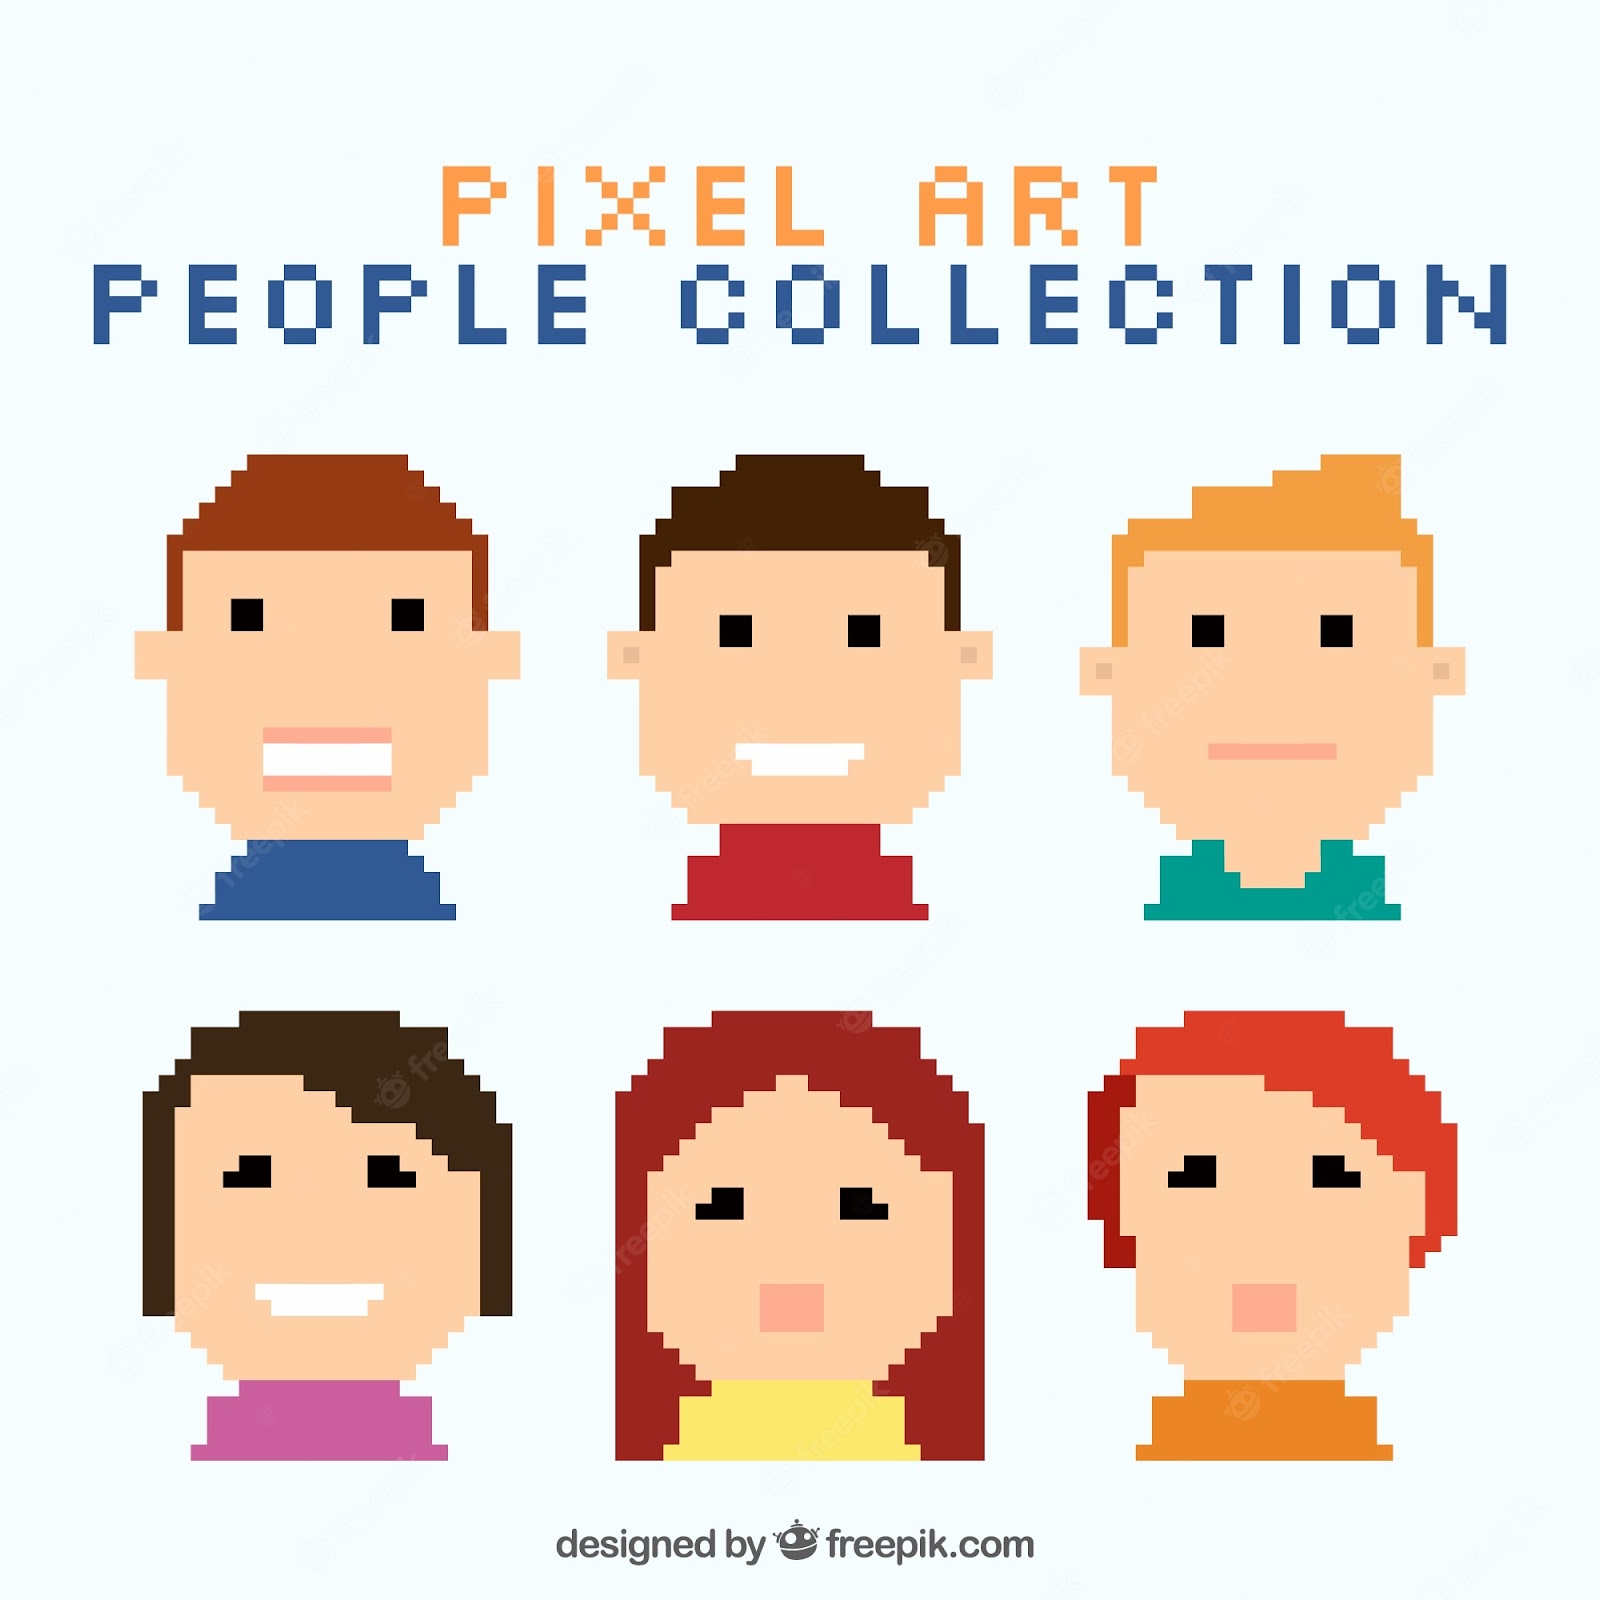 Pixel girl Images | Free Vectors, Stock Photos & PSD